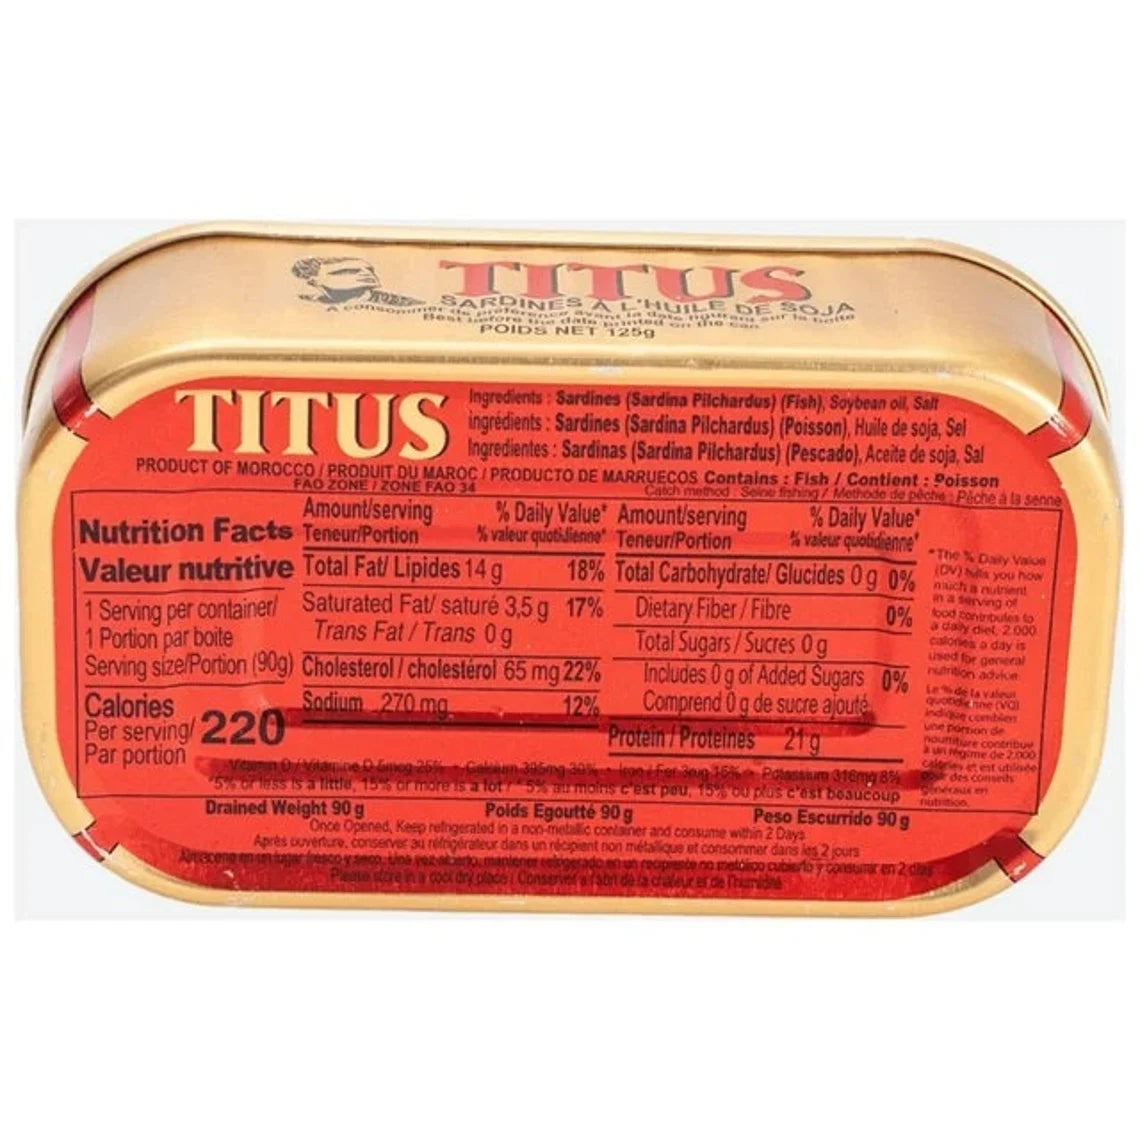 Titus Sardines; Original Sardines from Nigeria